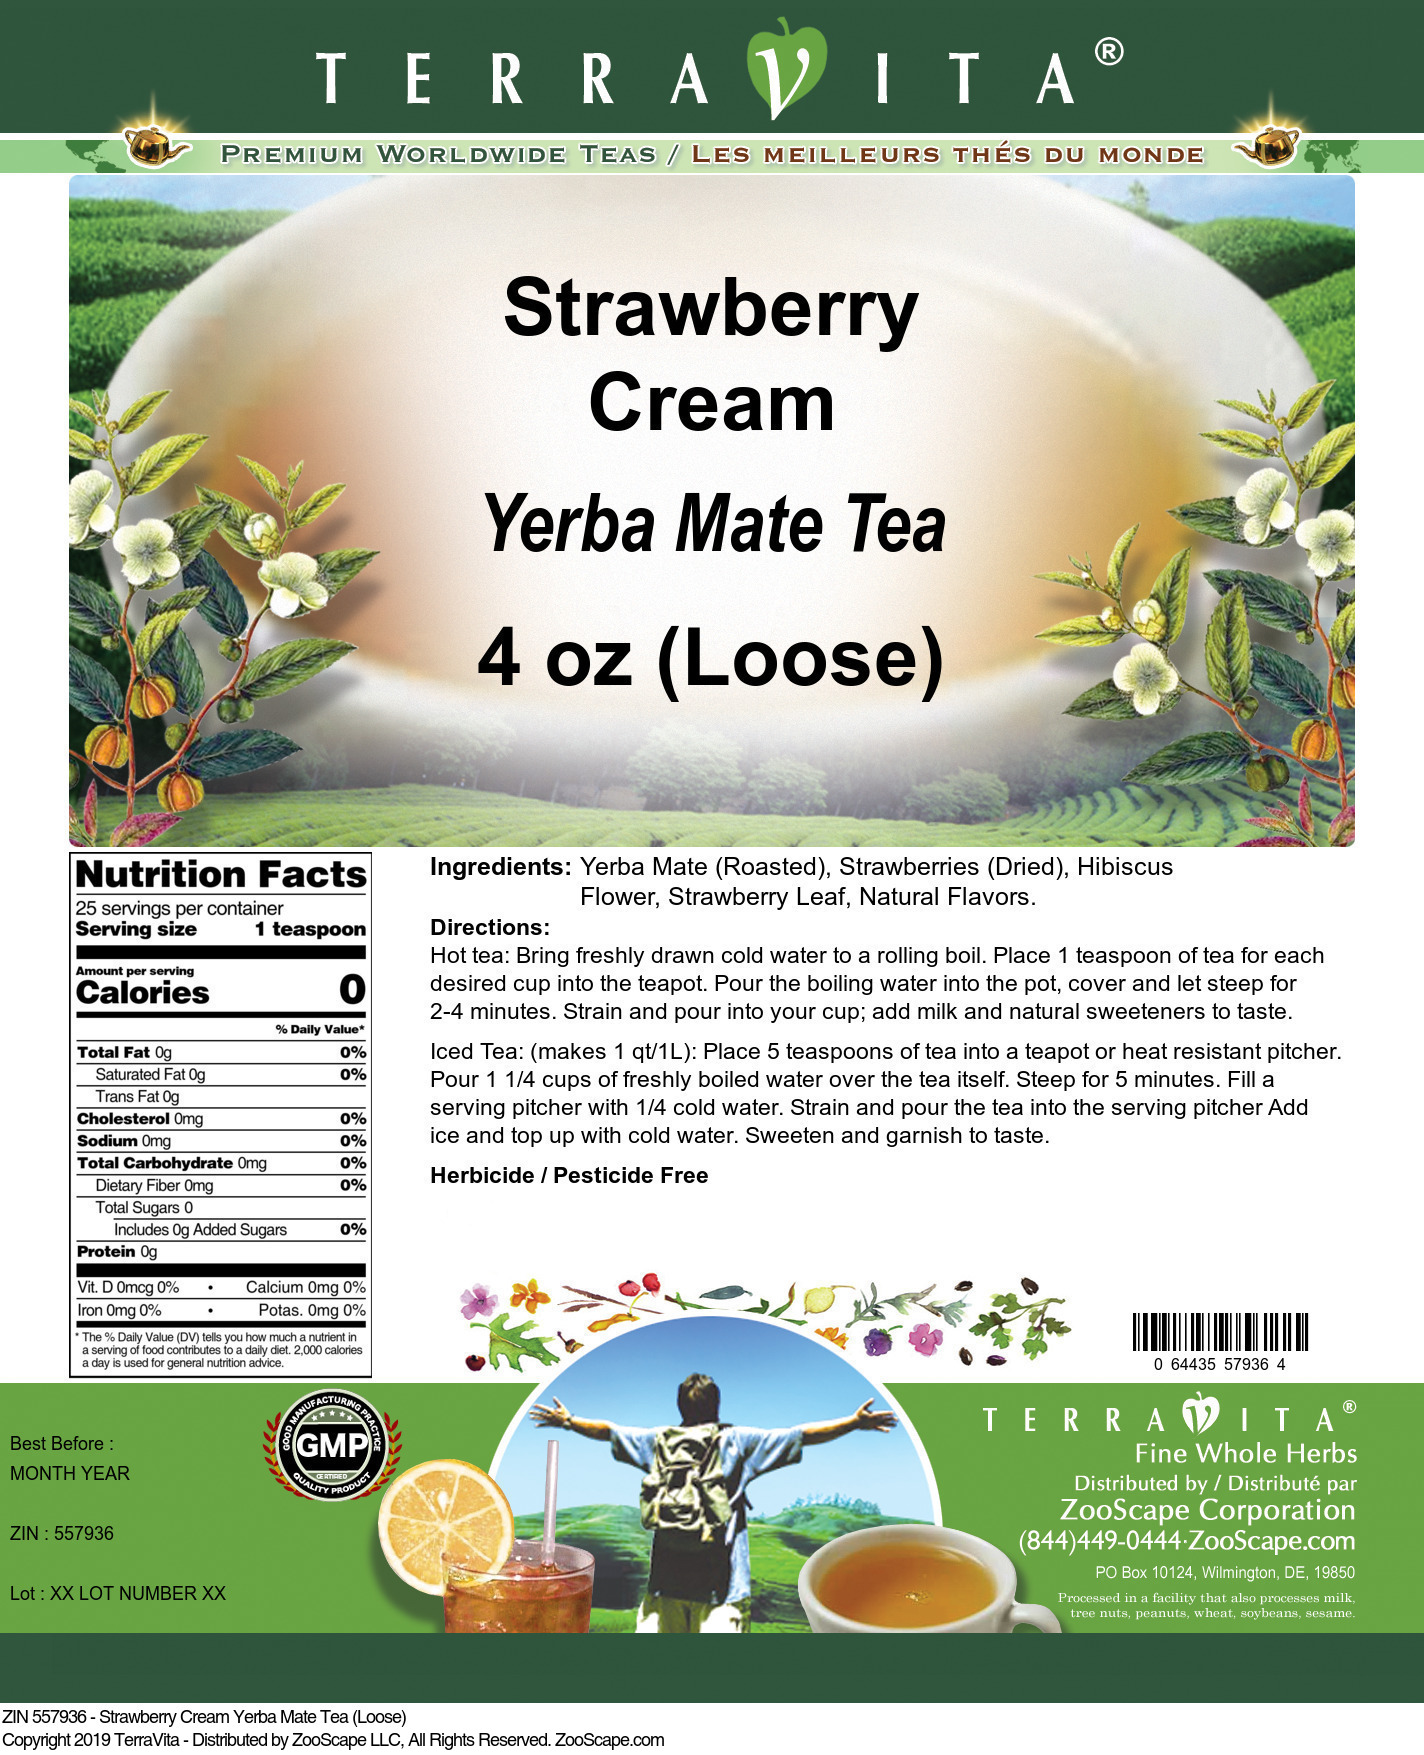 Strawberry Cream Yerba Mate Tea (Loose) - Label